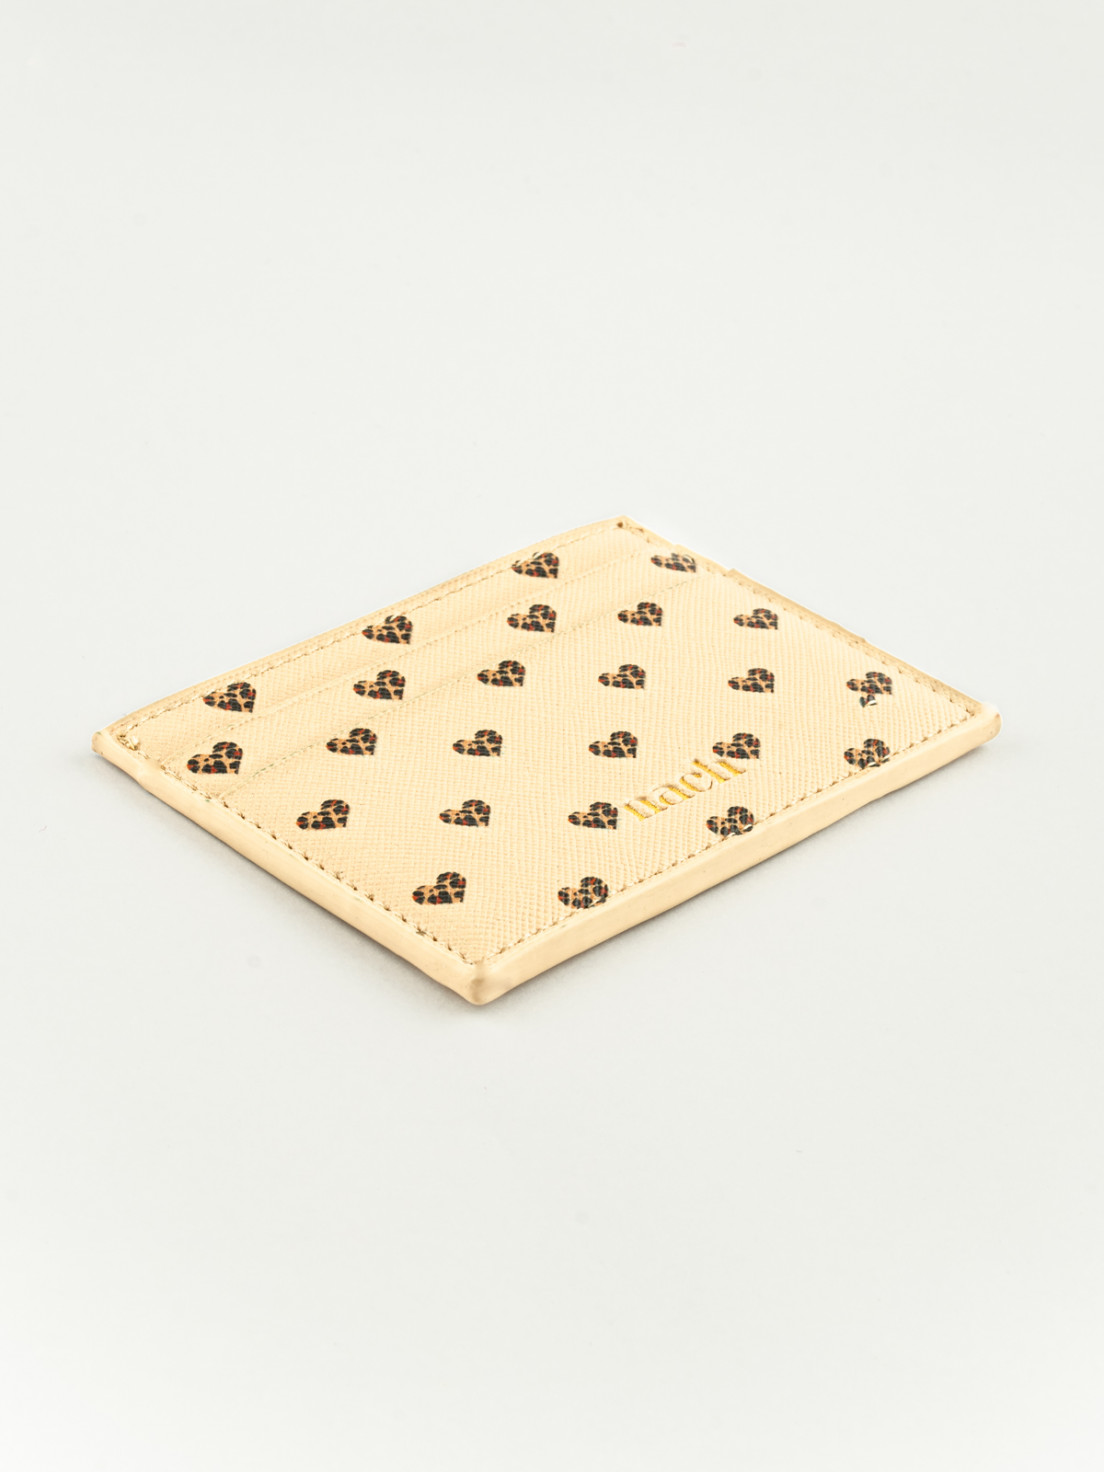 Leopard-print card holder